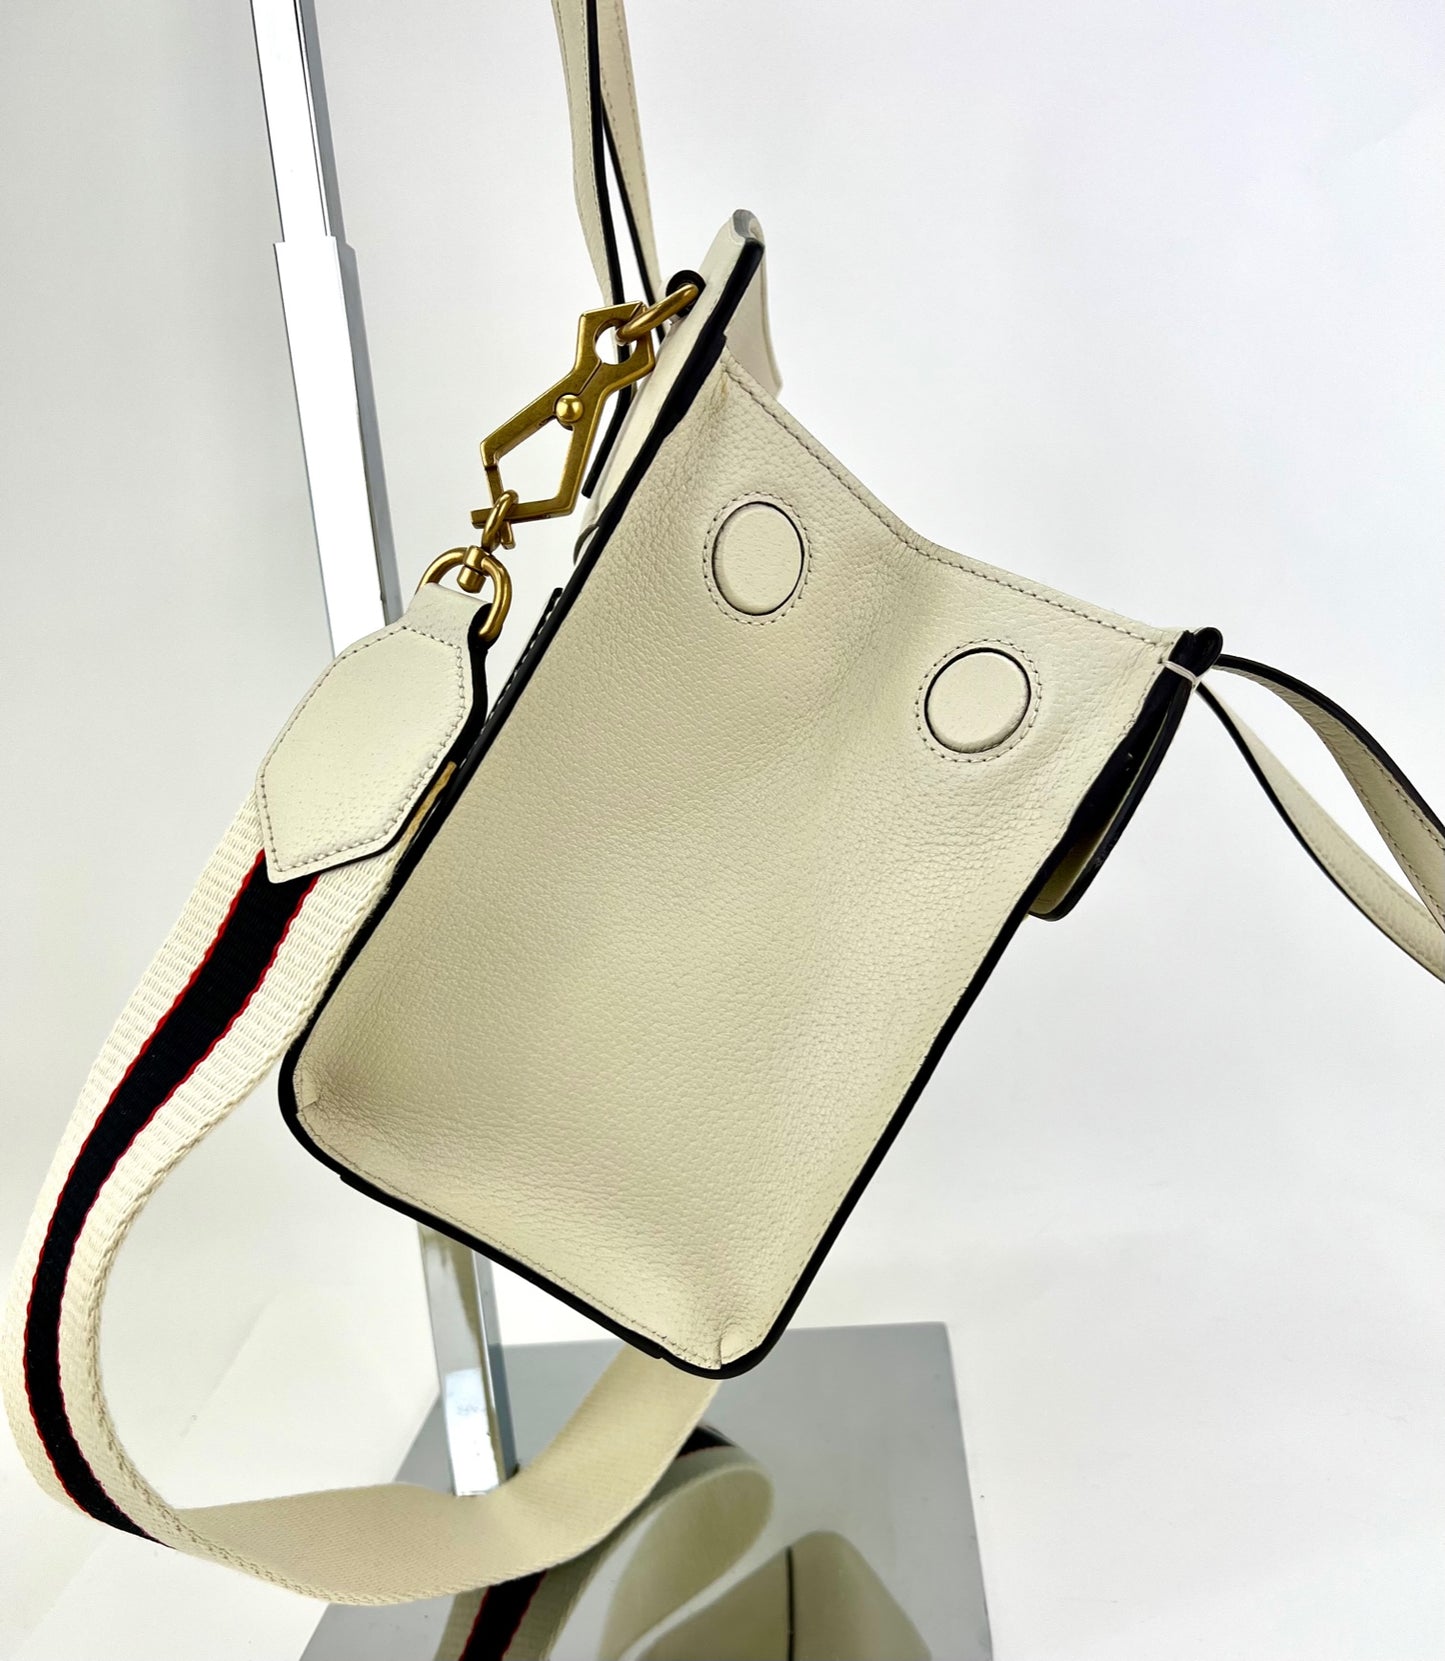 Gucci Horsebit 1955 mini bag - reviews? : r/handbags